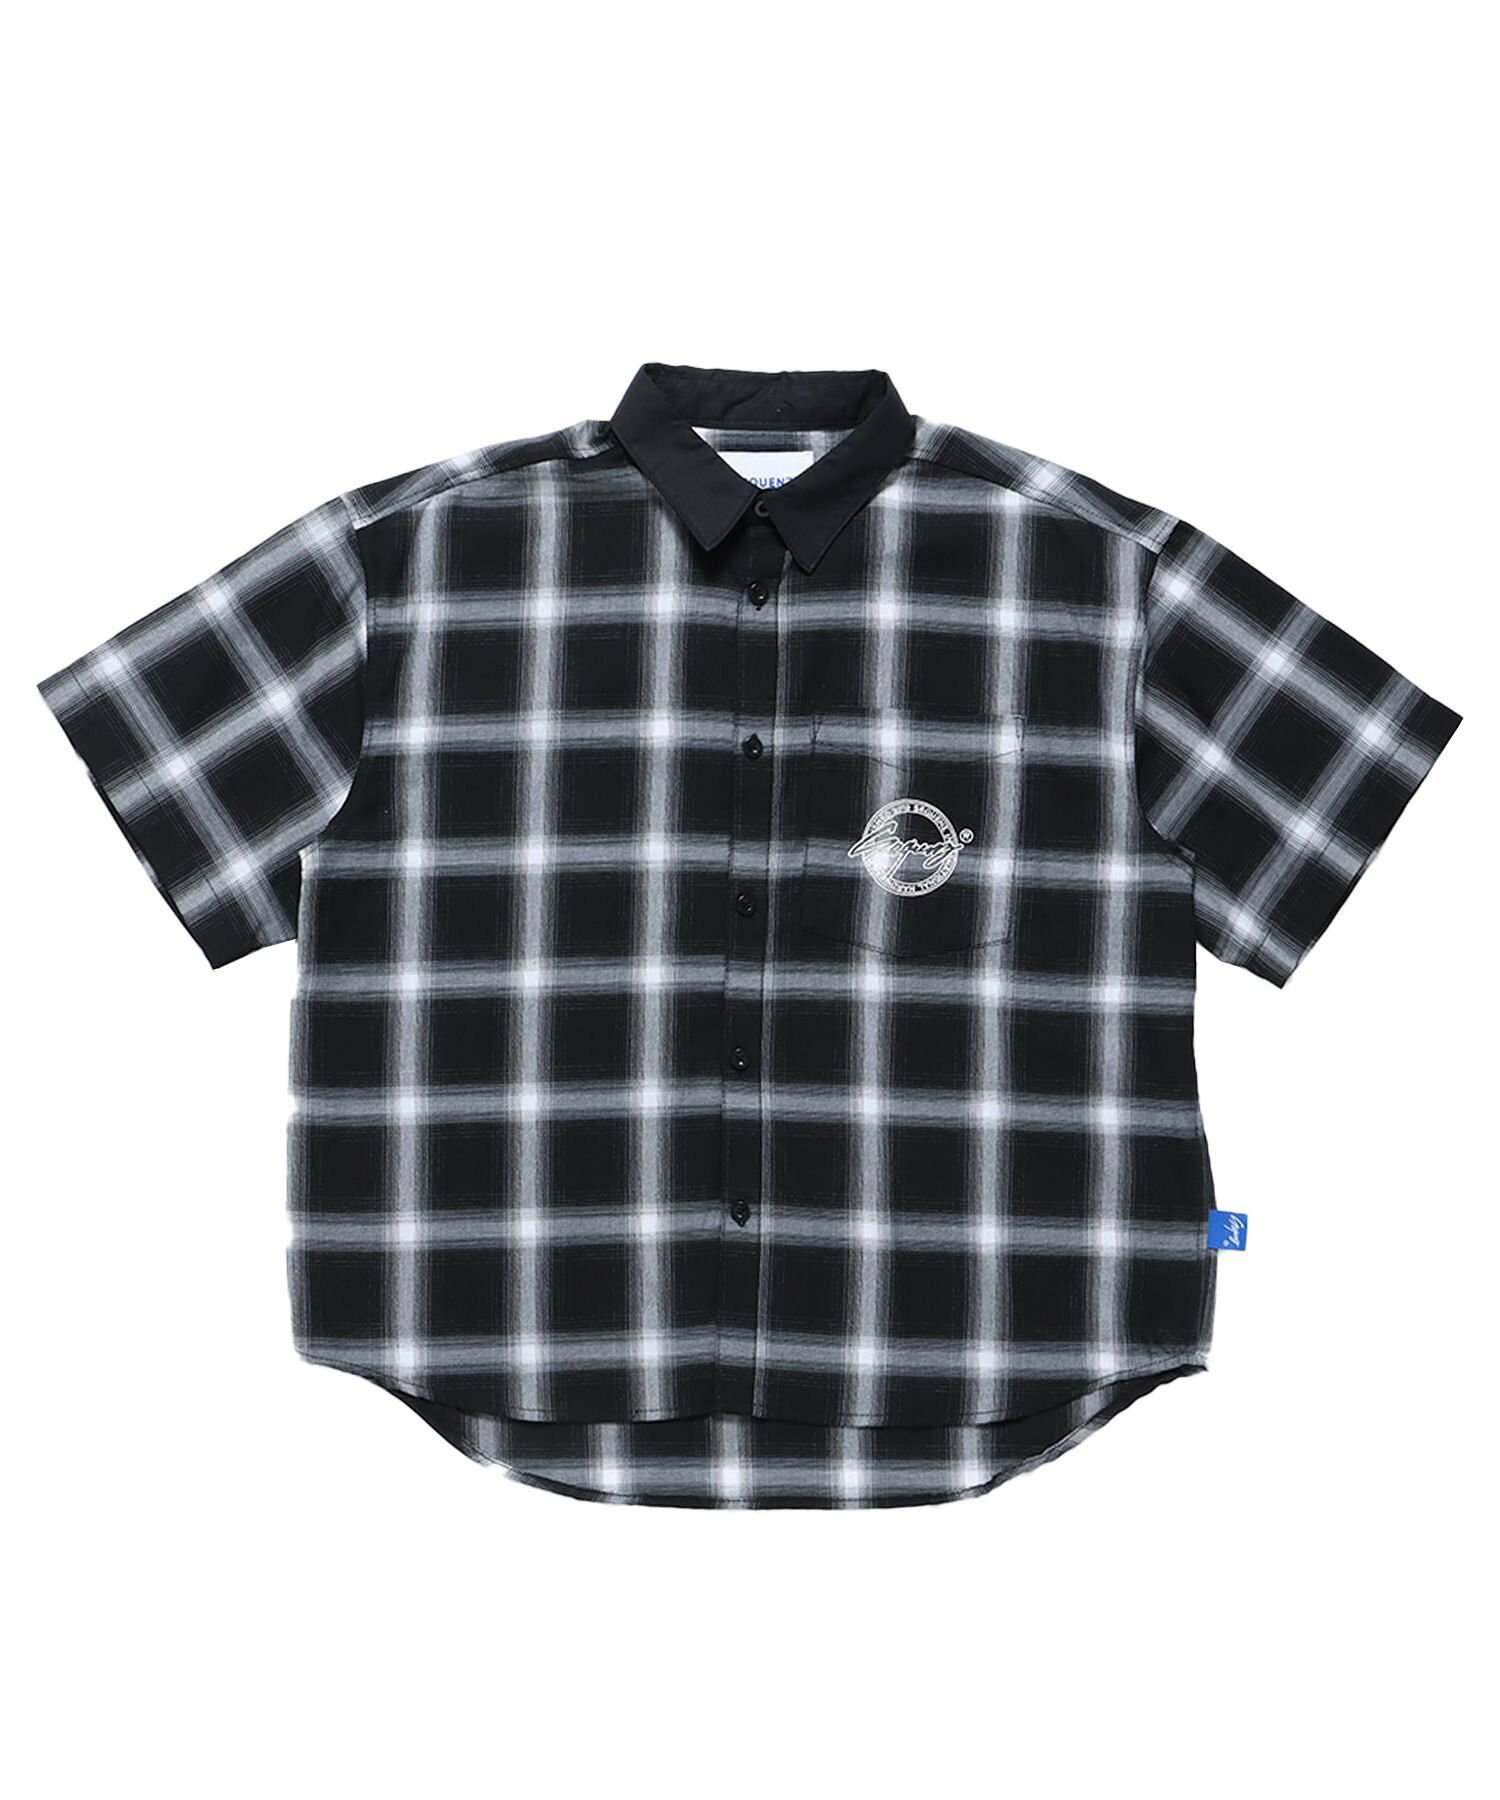 【SEQUENZ】CHECK CLERIC S/S SHIRT / 半袖シャツ オープンカラー オンブレチェック サークルロゴ ブランド ワンポイント